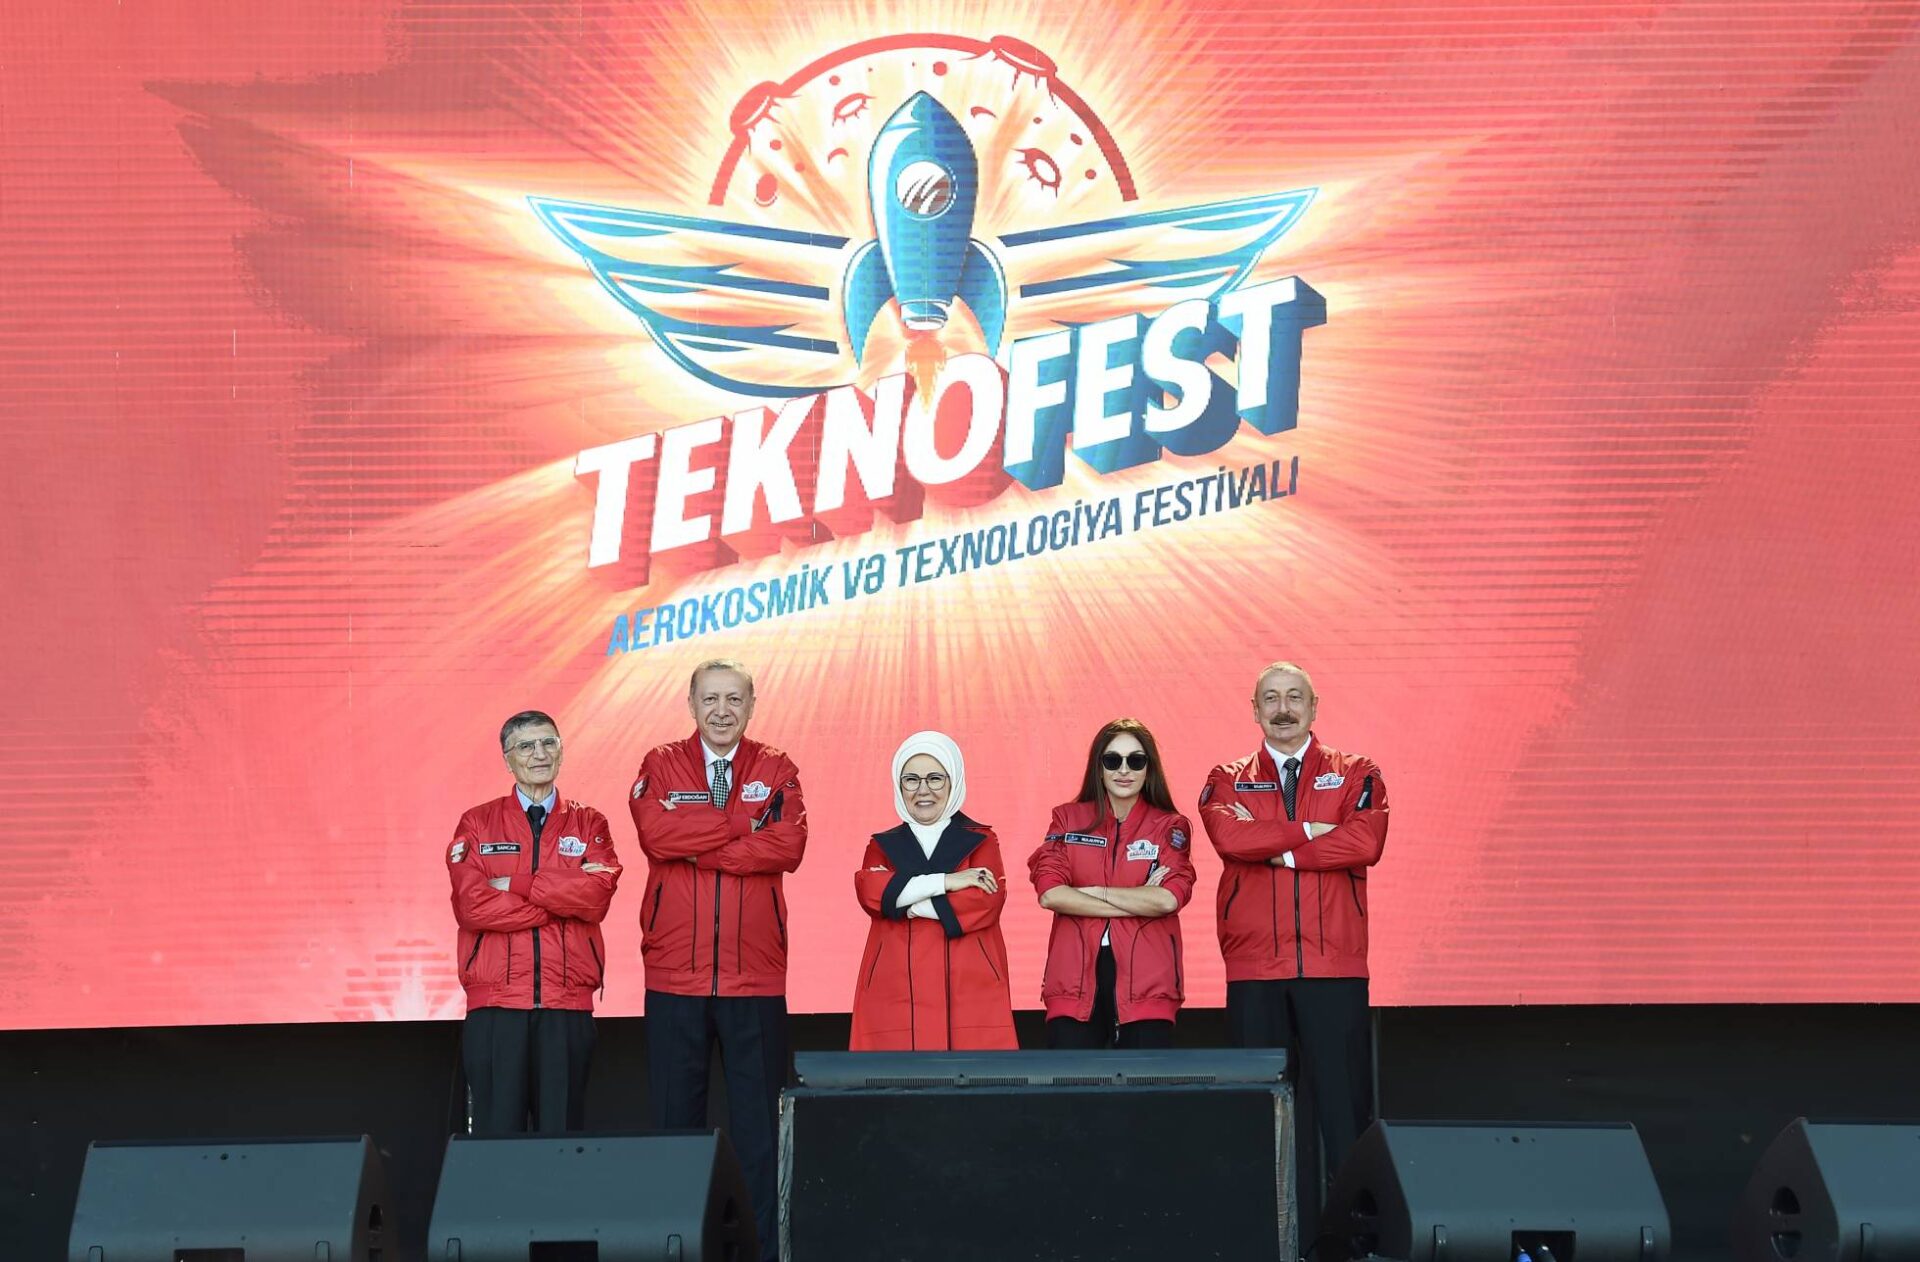 Ilham Aliyev et Recep Tayyip Erdogan ont assisté au festival TEKNOFEST d’Azerbaïdjan à Bakou